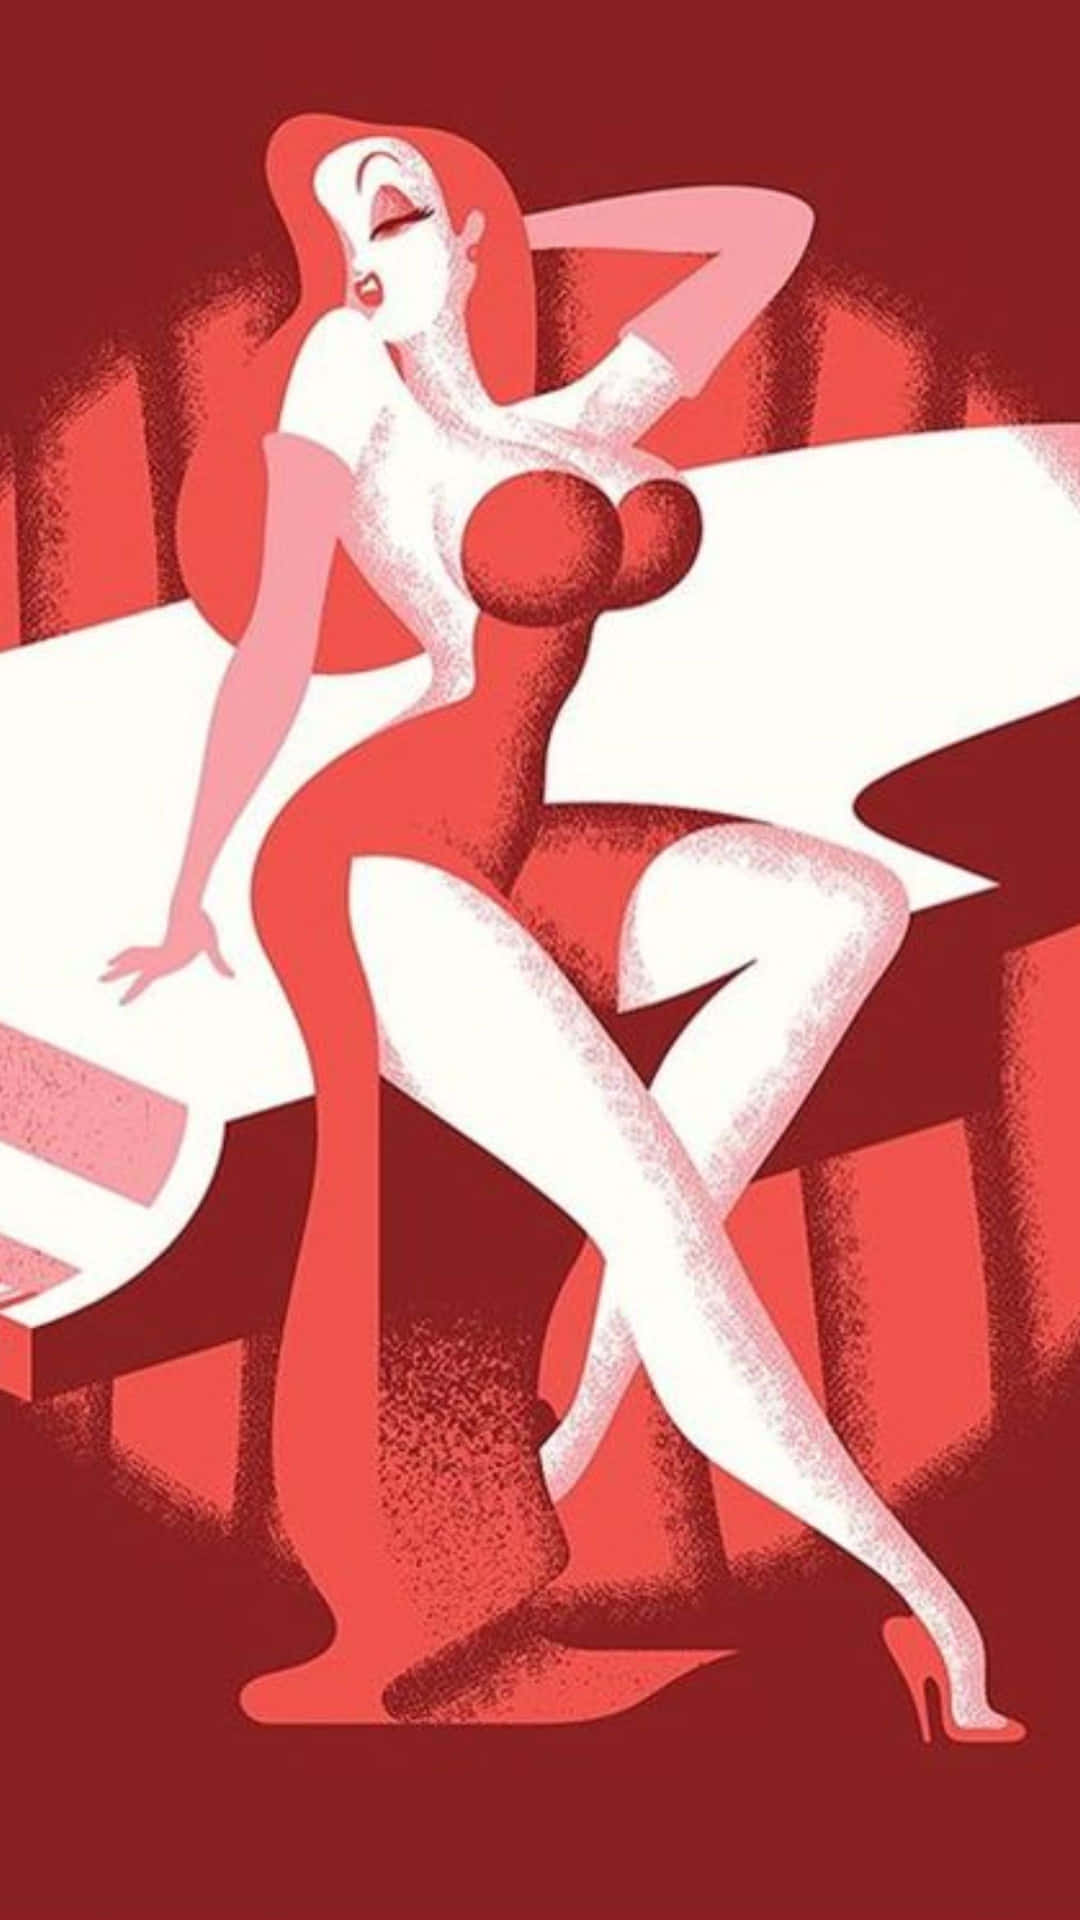 Jessica Rabbit Red Background Illustration Wallpaper